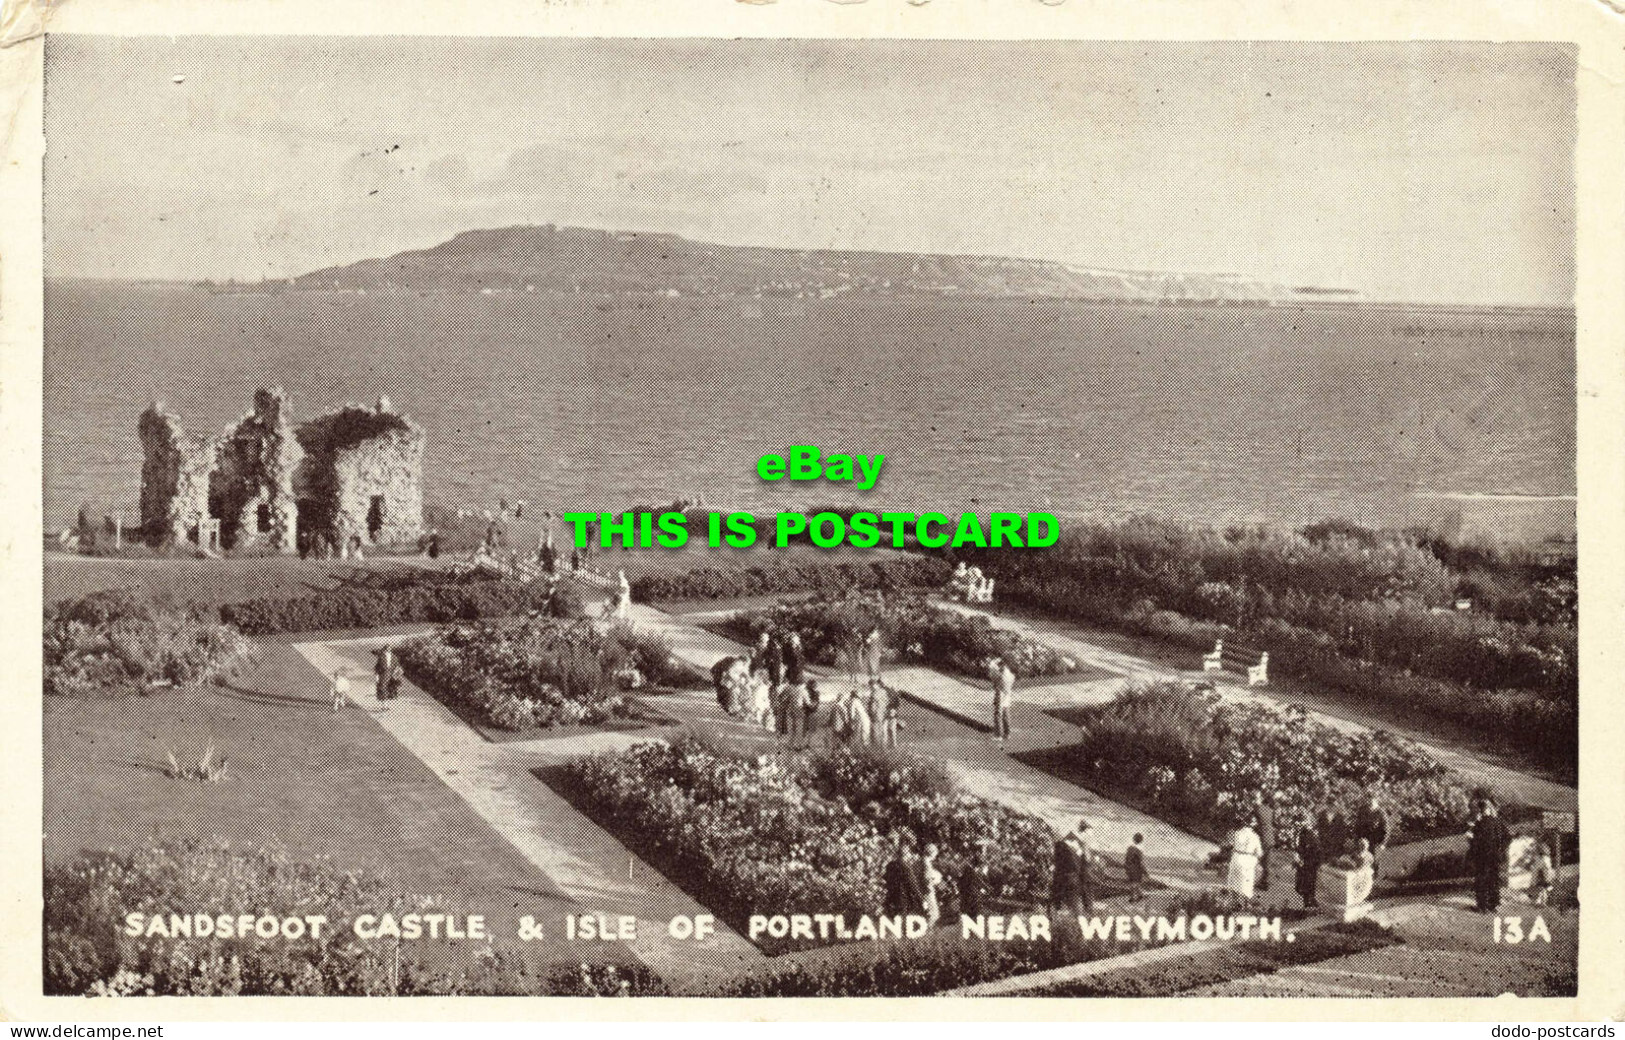 R567876 Sandsfoot Castle And Isle Of Portland Near Weymouth. 13A. 1952 - World